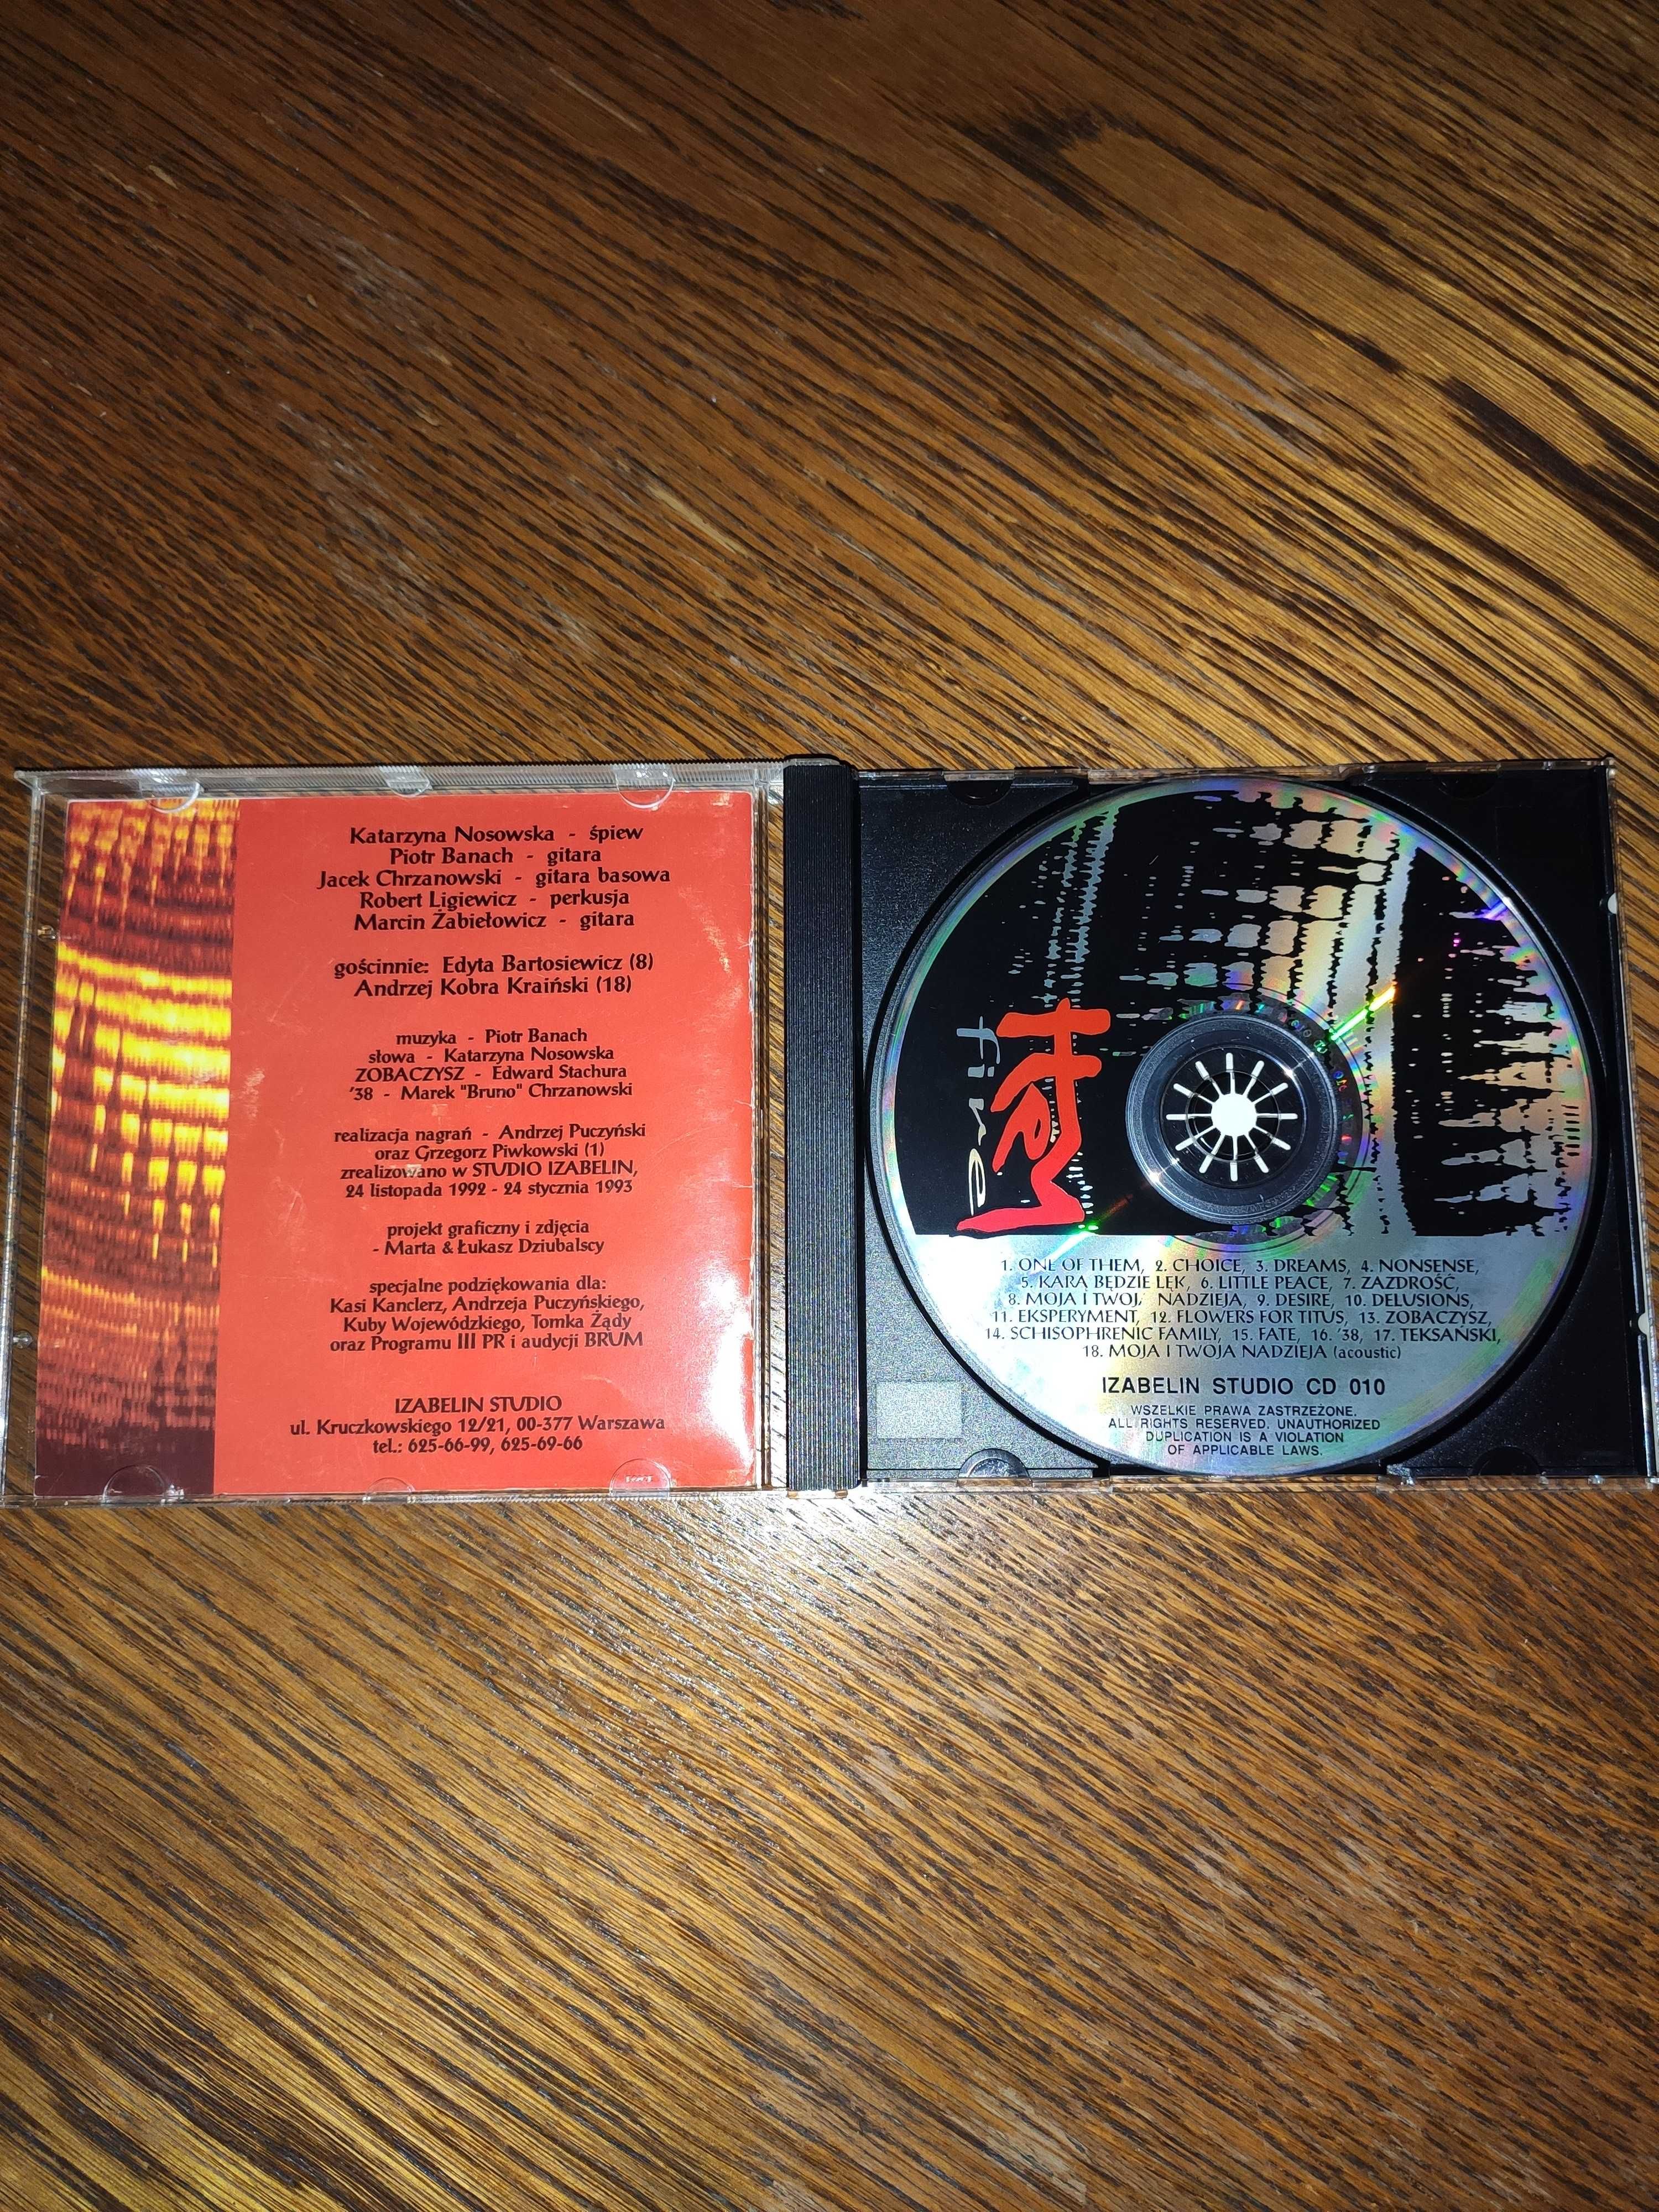 Hey - Fire, CD 1993, Izabelin, czerwone logo, Nosowska, Banach